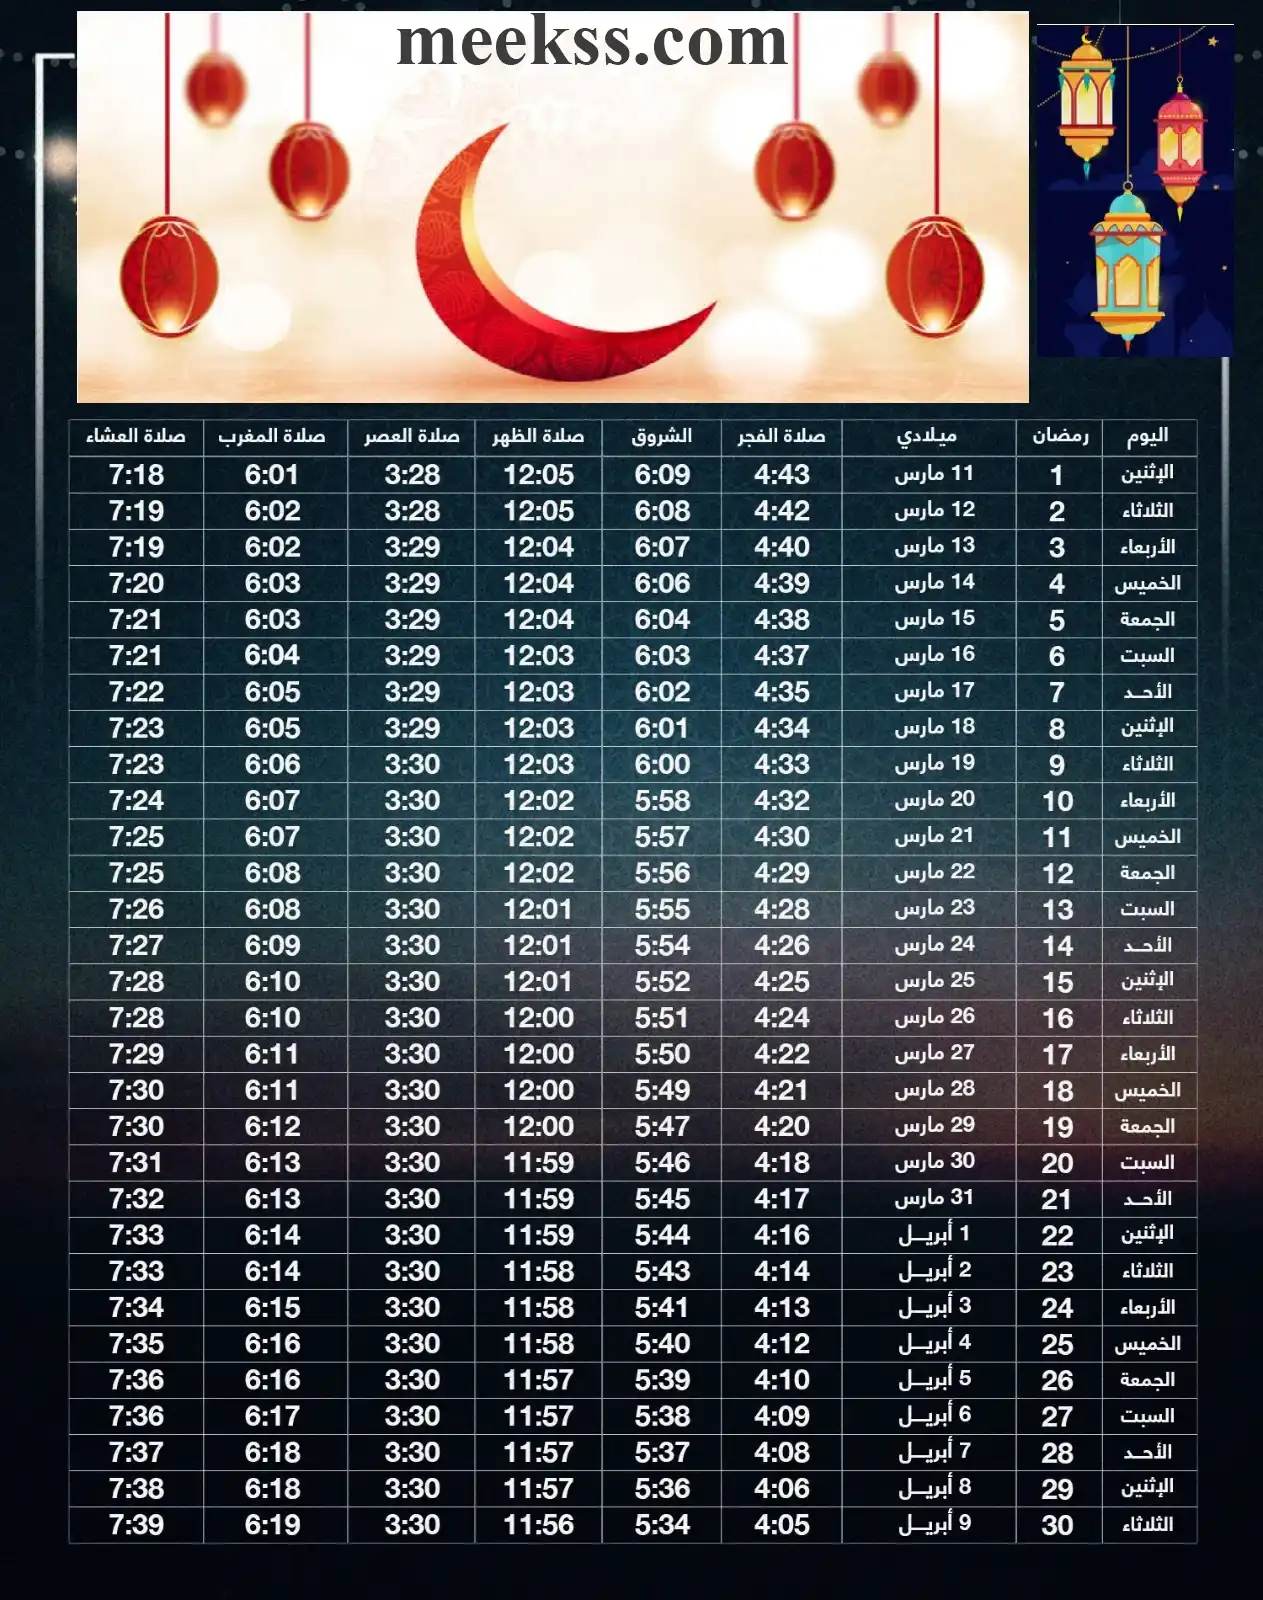 باقي كم يوم على رمضان